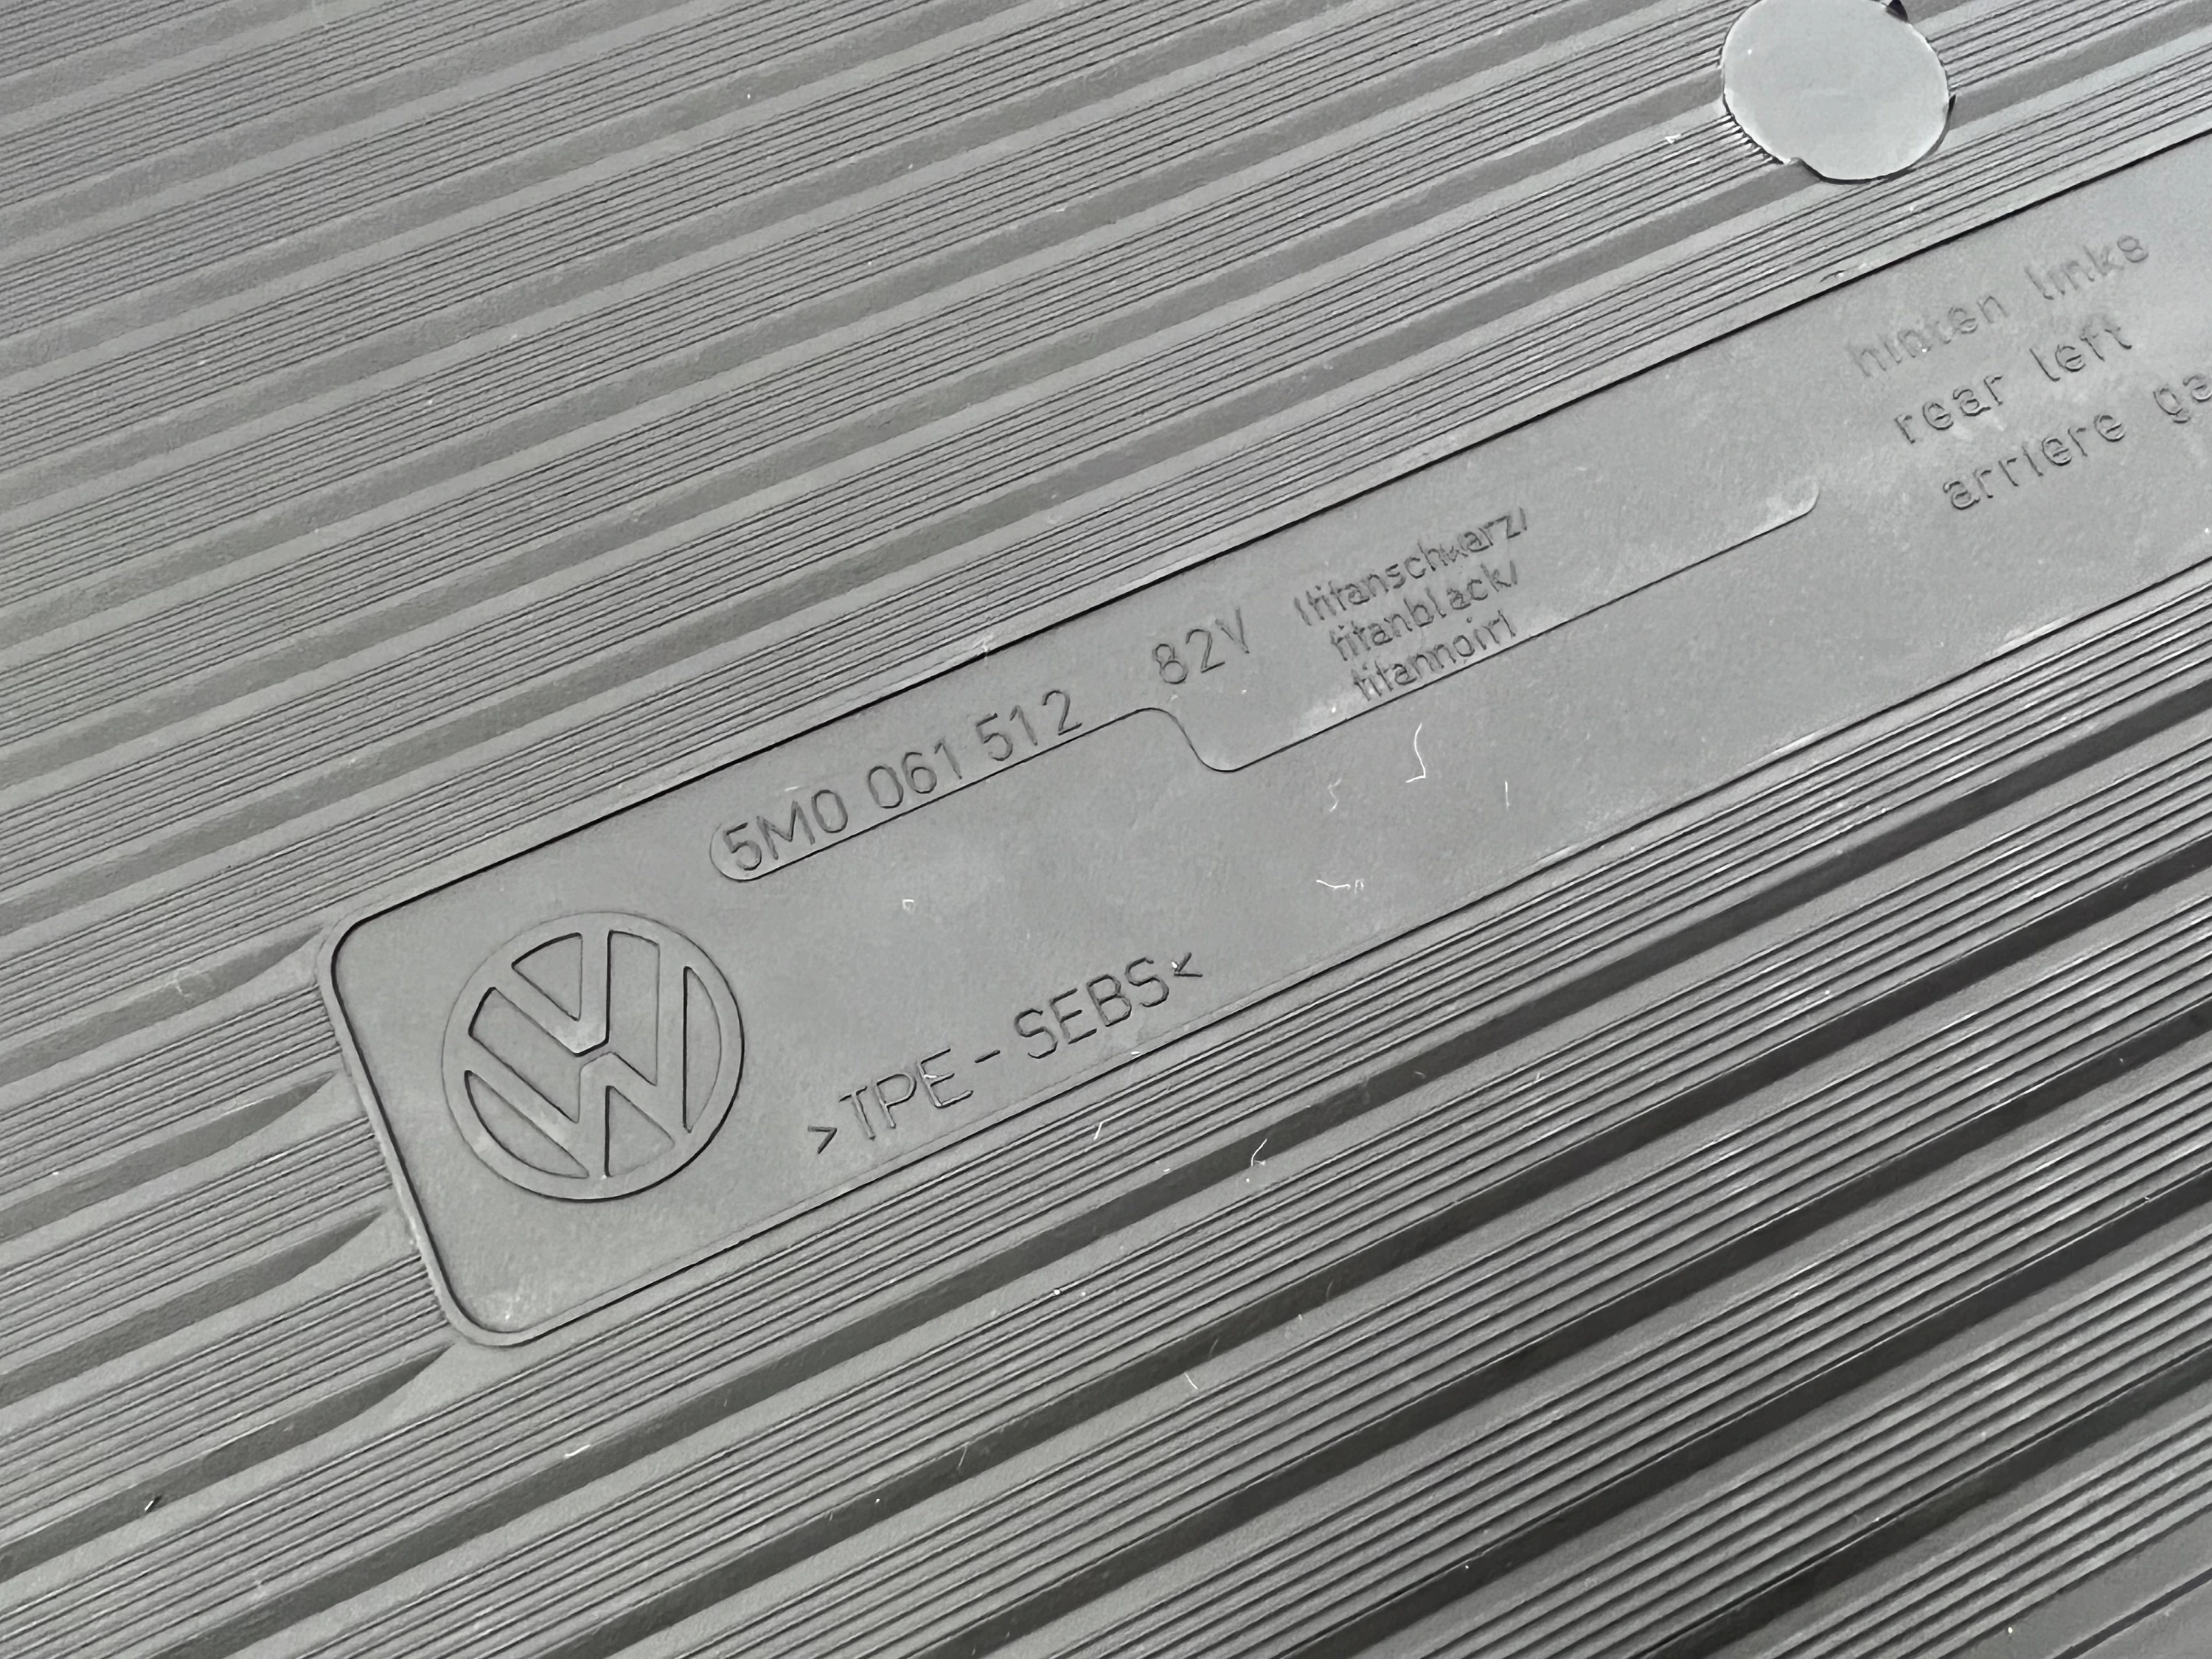 Original RS-Original-Carsupply Plus VW Golf Fussmatten | schwarz Gummi